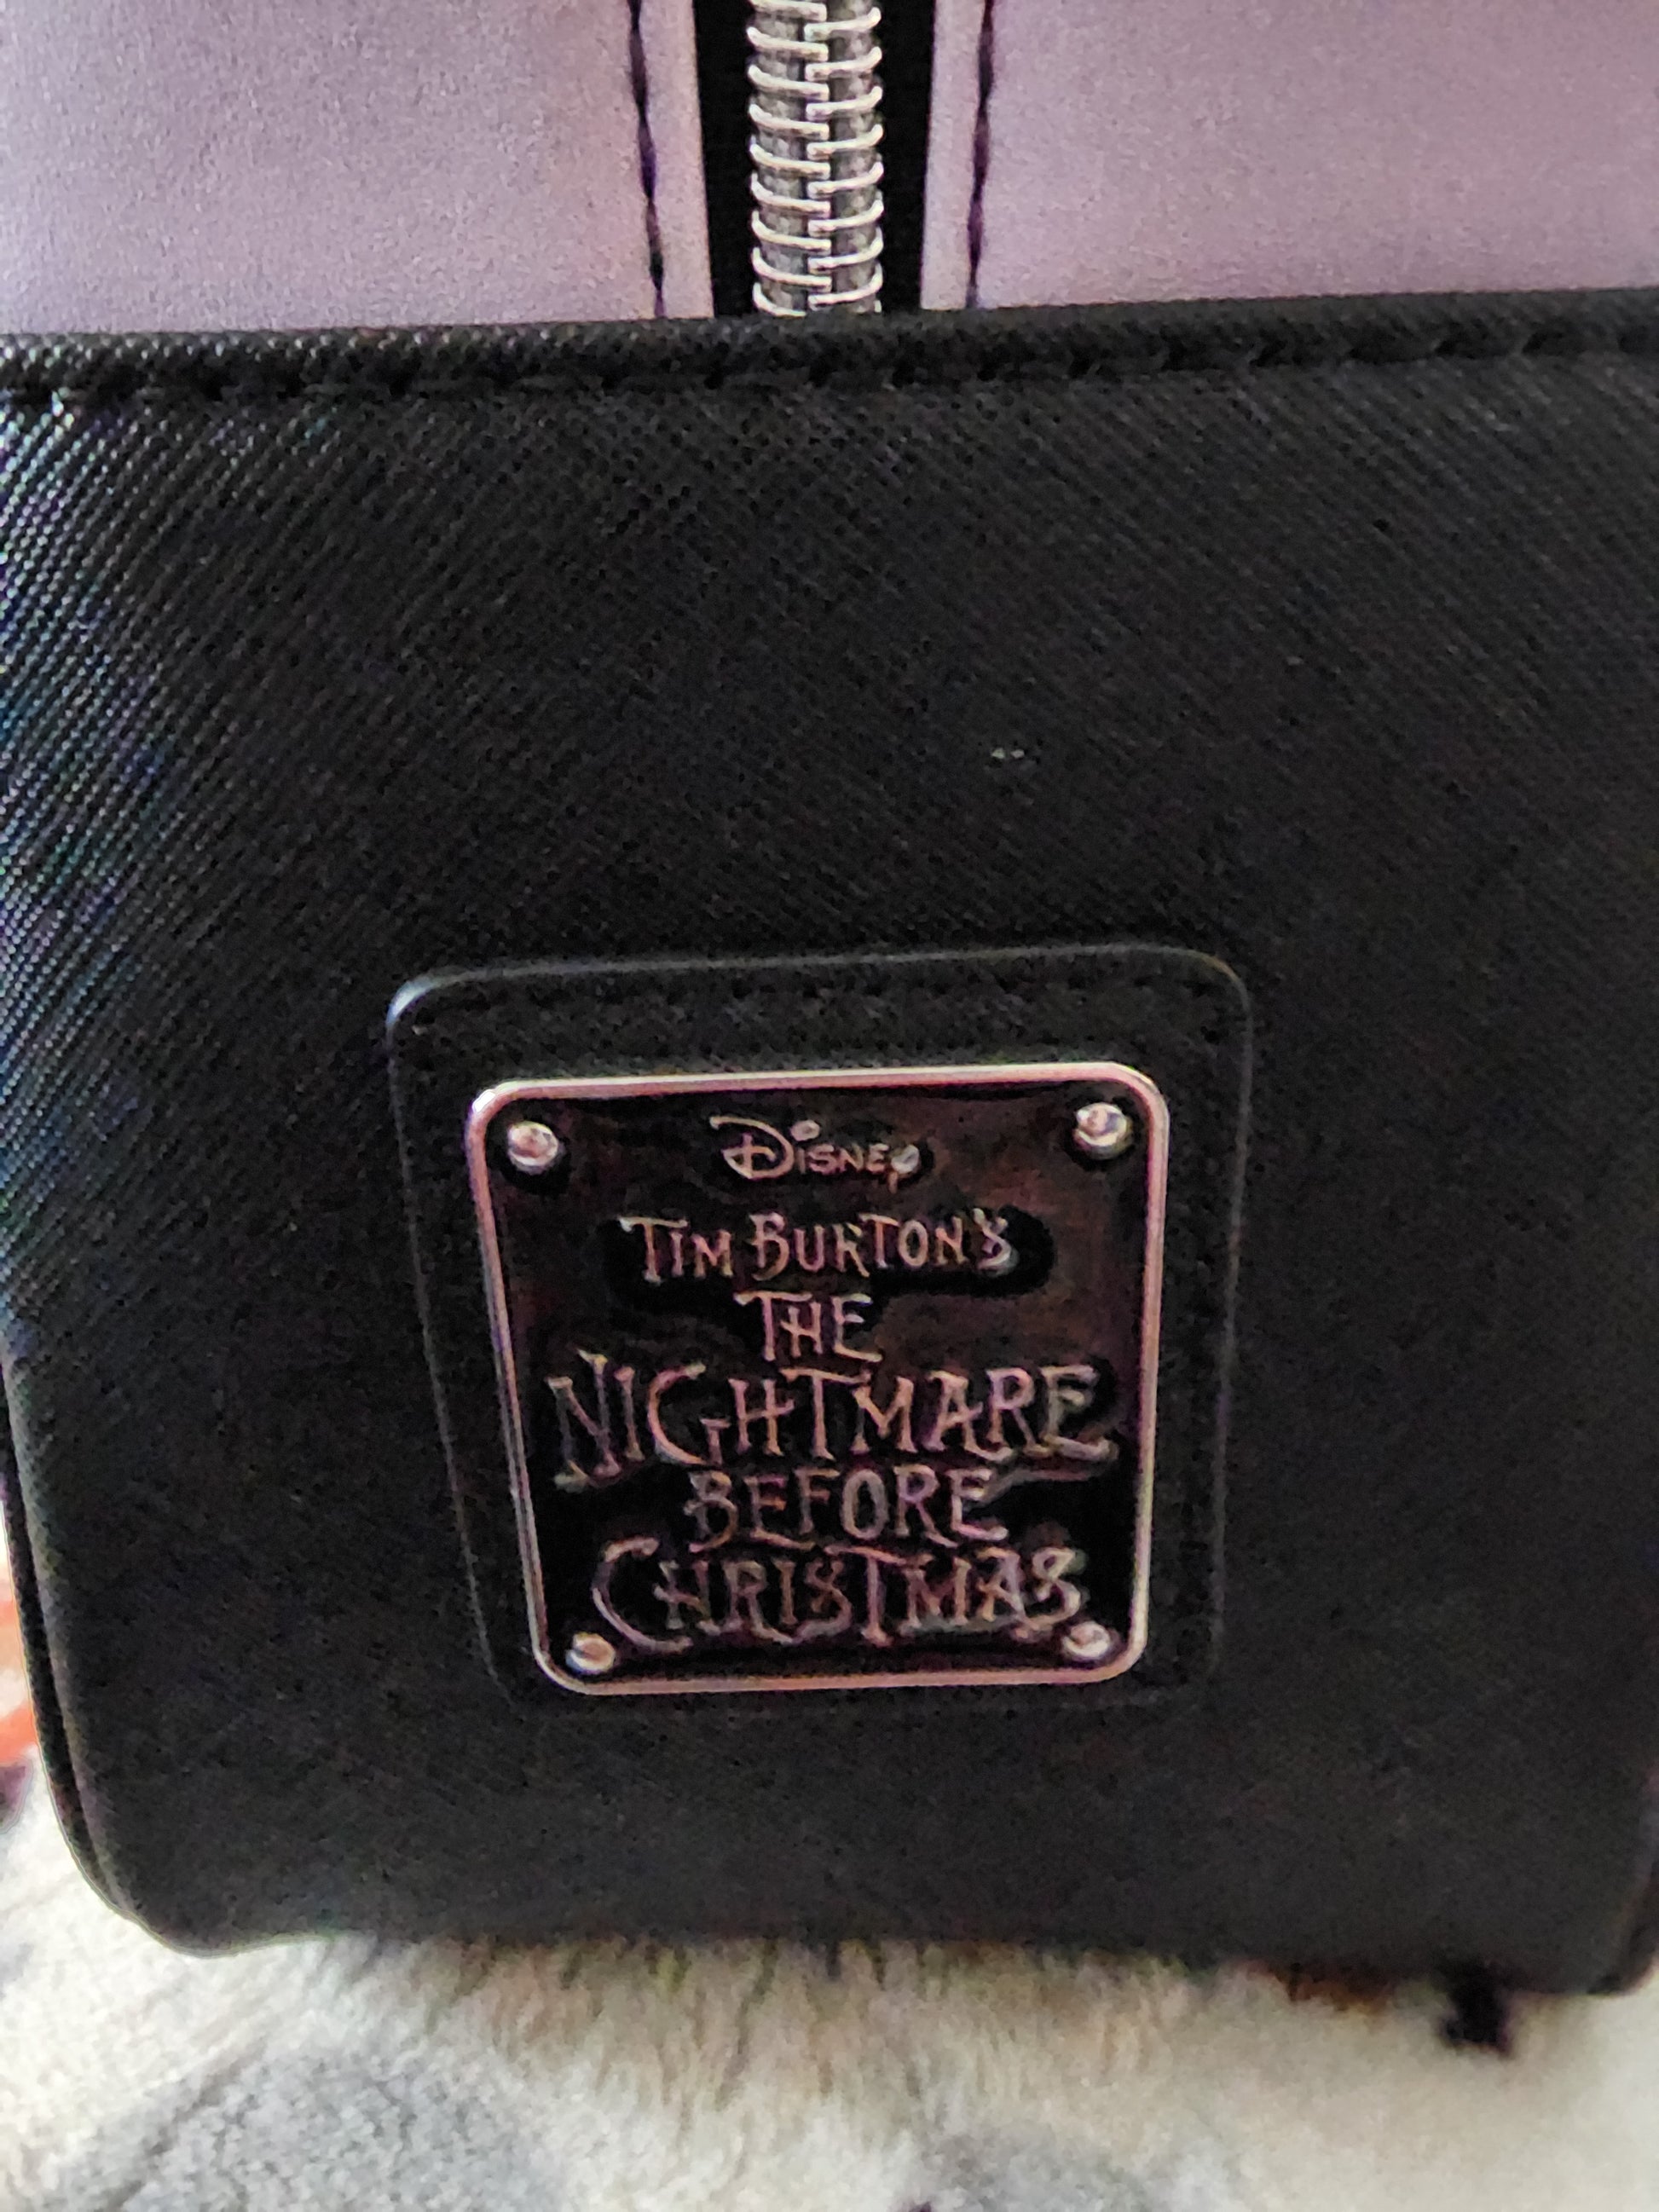 Disney Maleficent Handbag Apparel by Loungefly